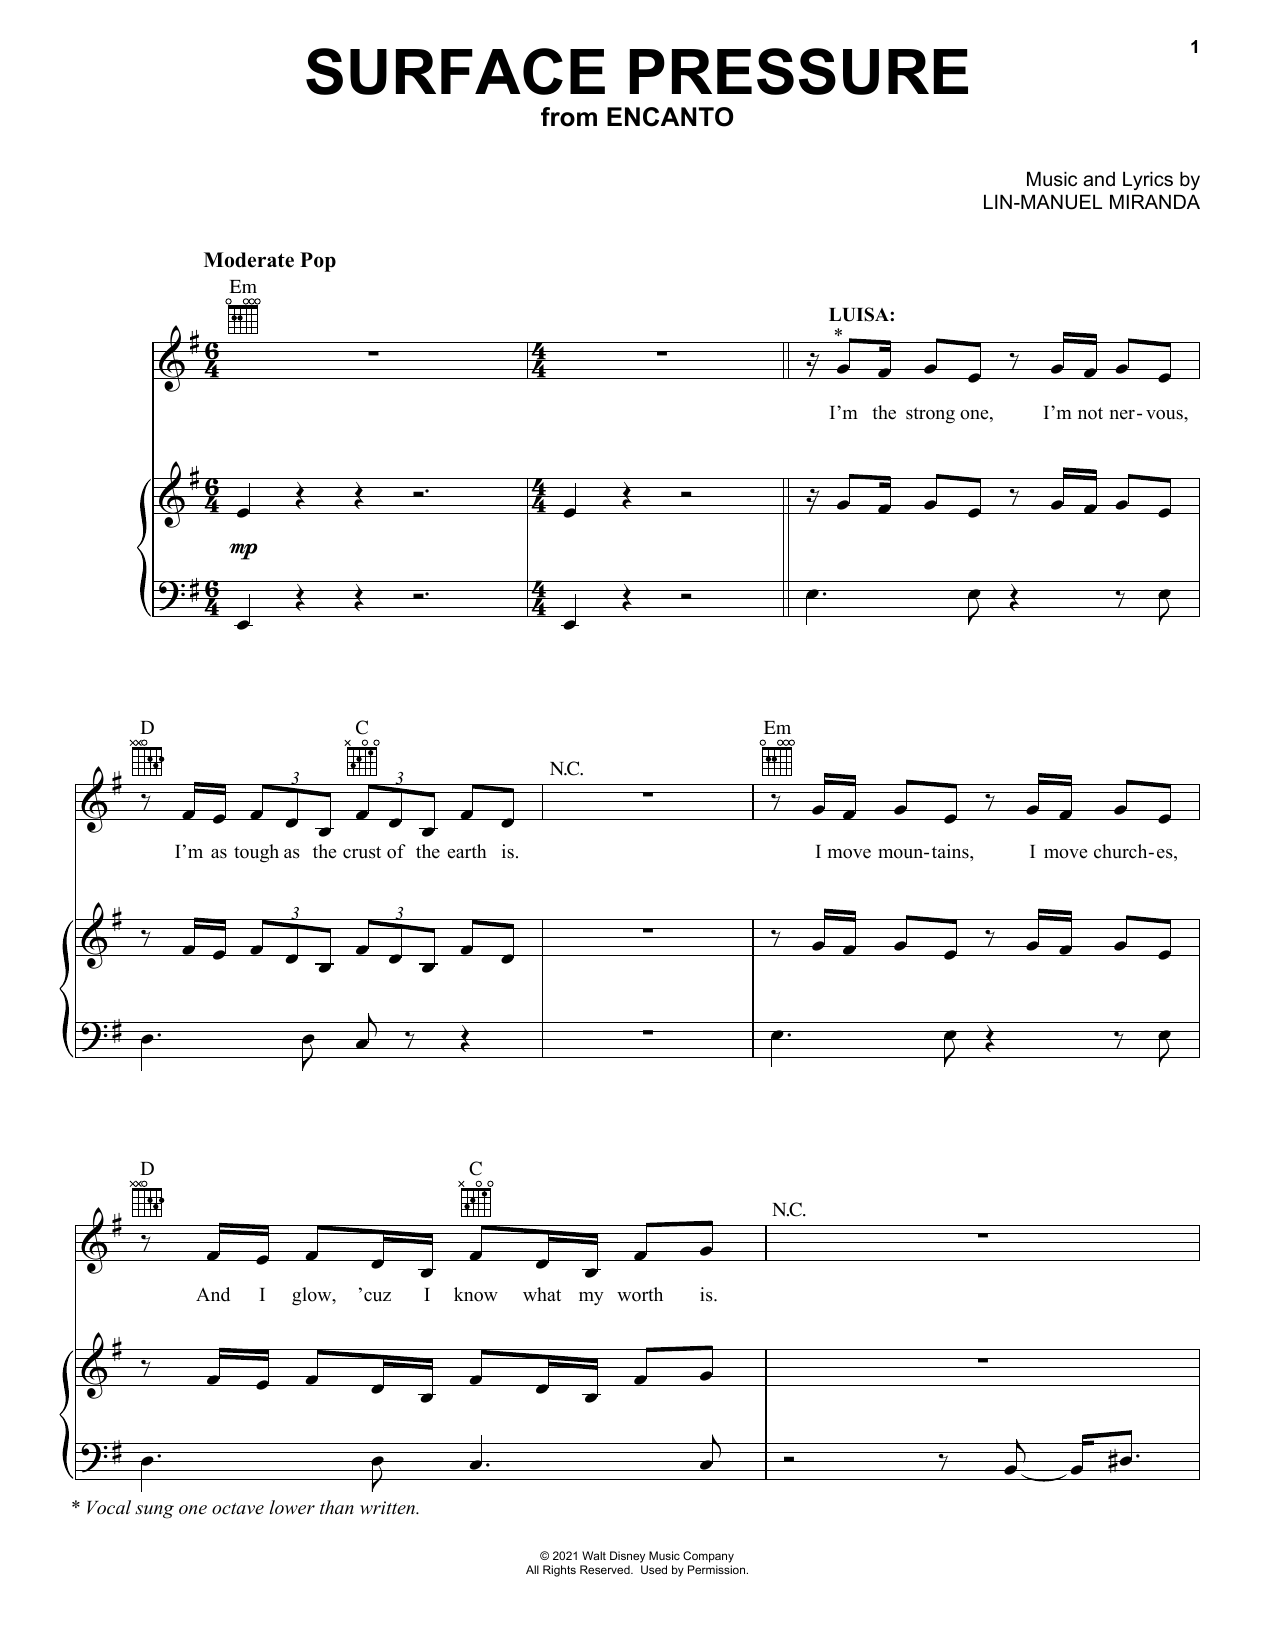 Lin-Manuel Miranda Surface Pressure (from Encanto) Sheet Music Notes & Chords for Ukulele - Download or Print PDF